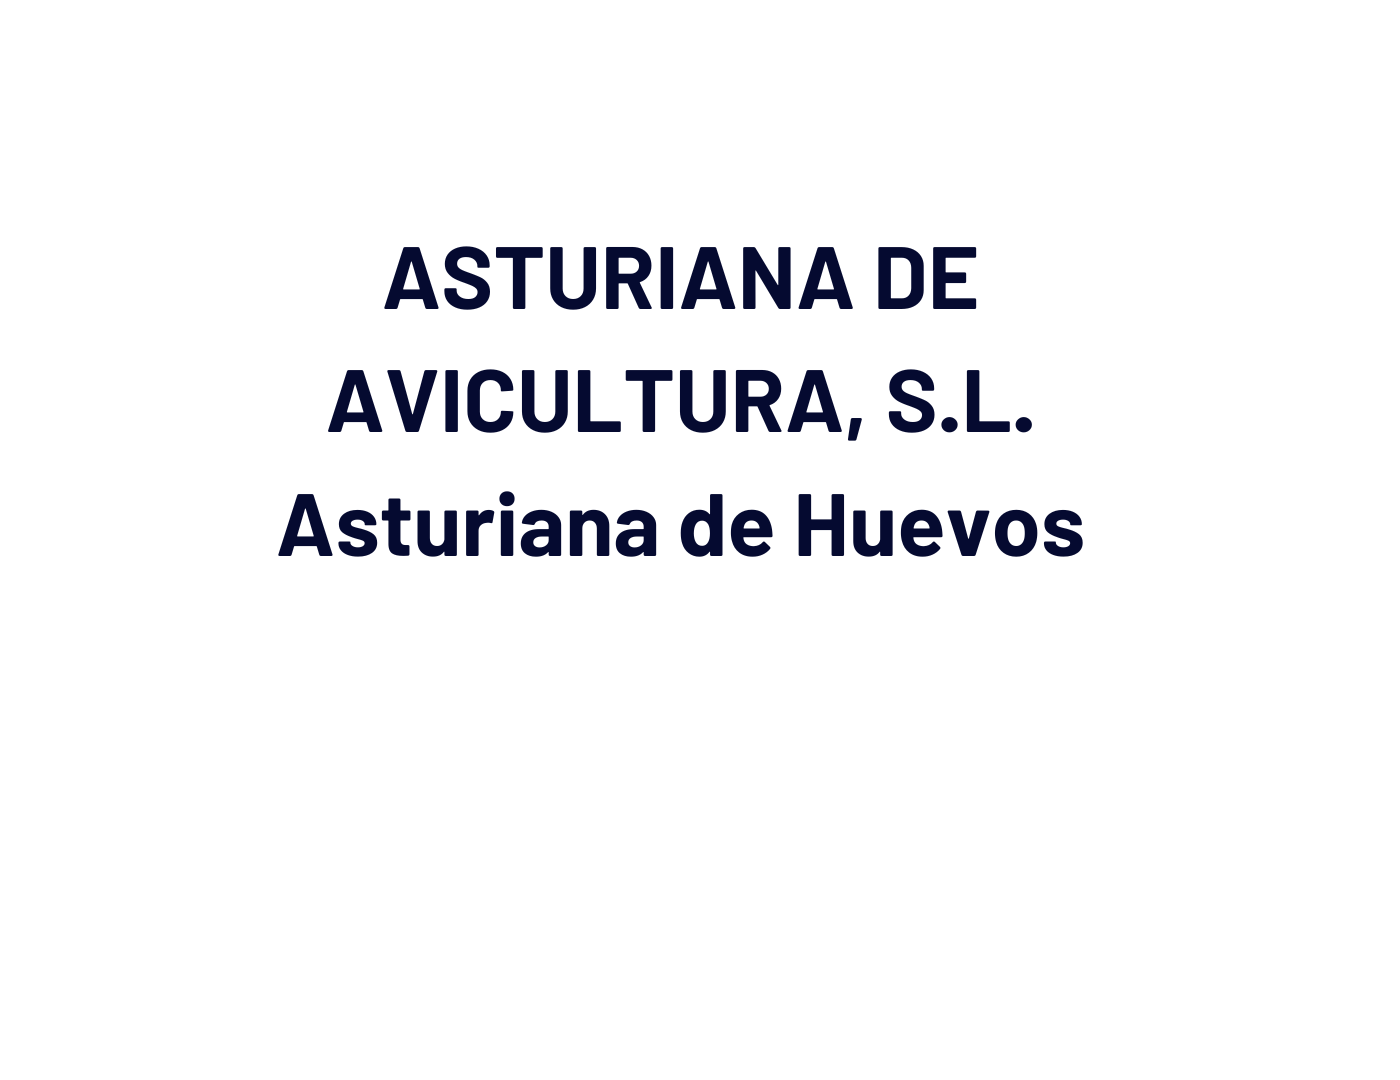 ASTURIANA DE AVICULTURA, S.L.